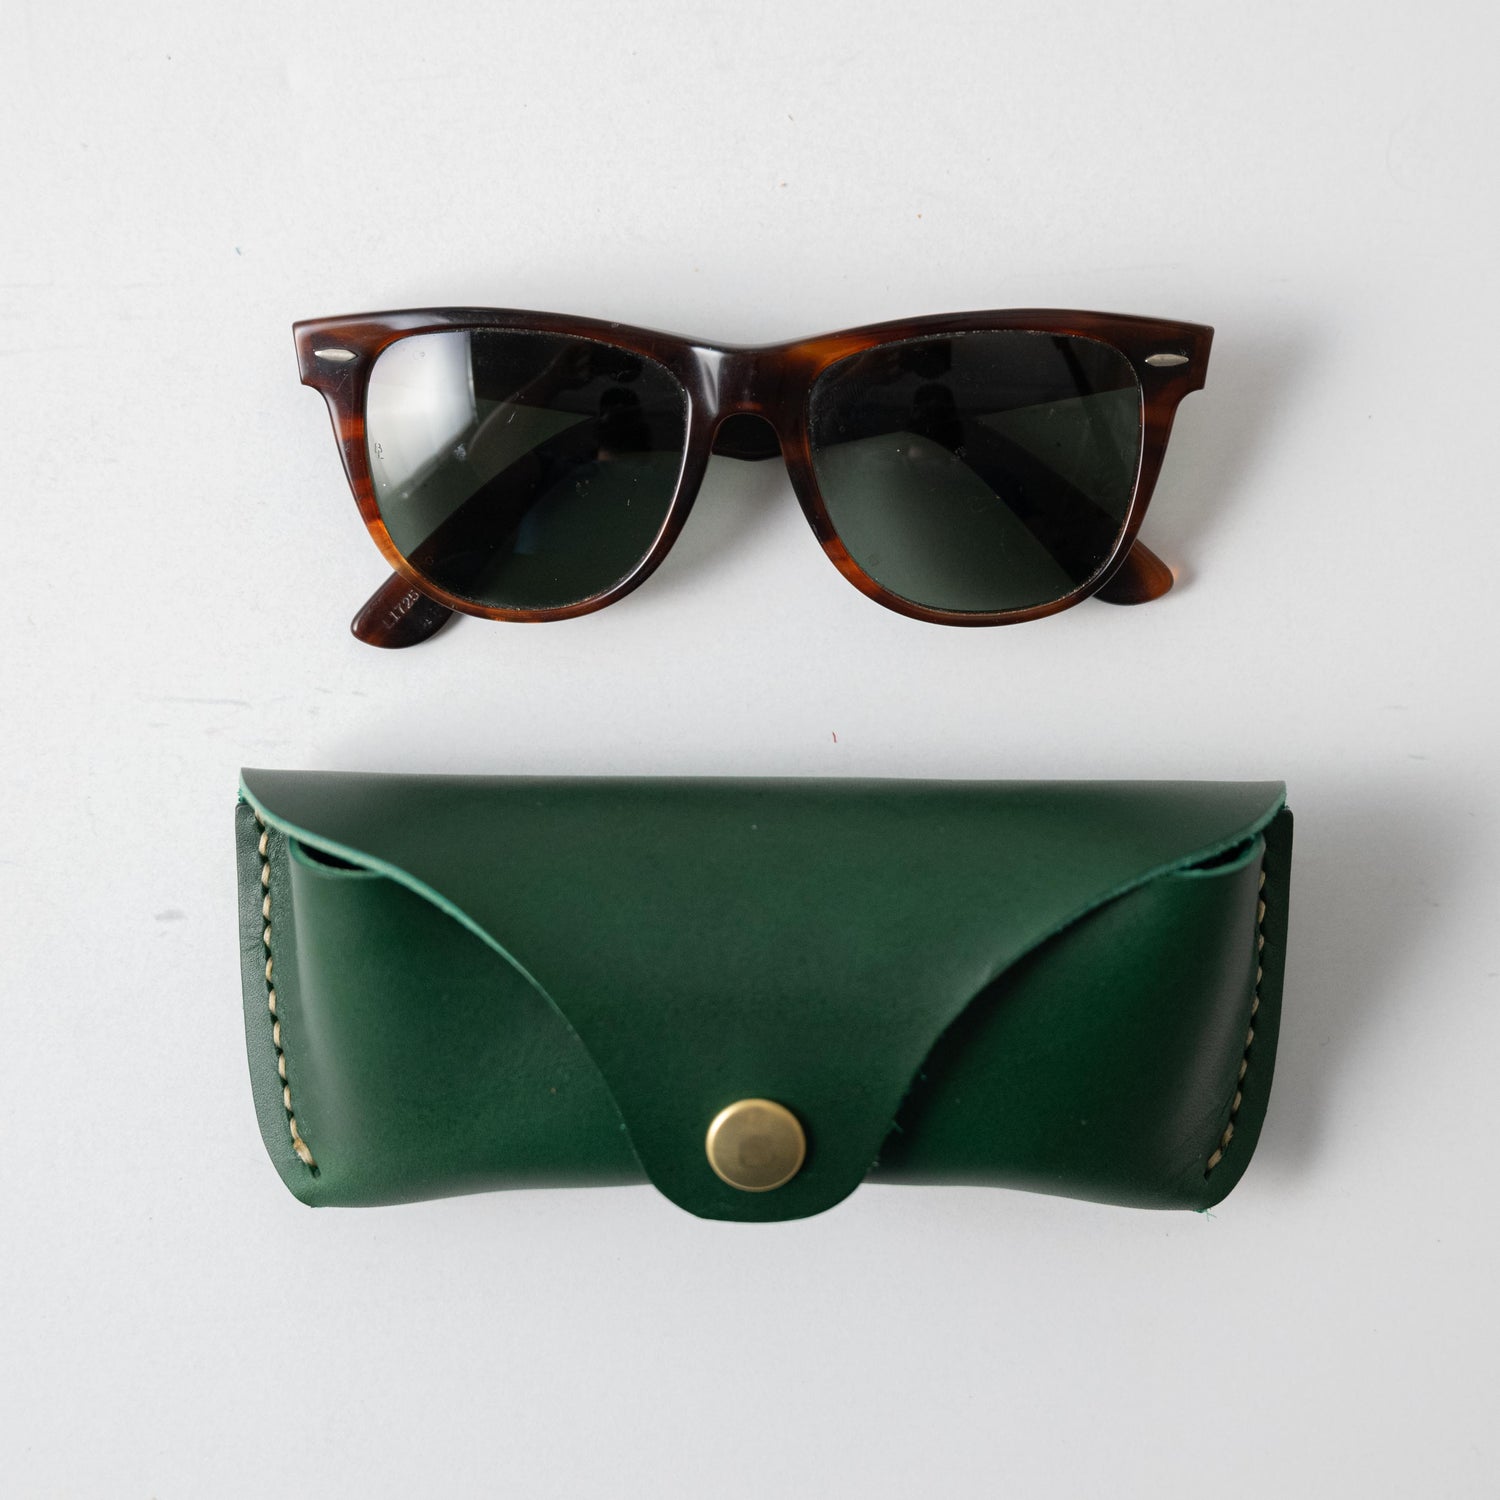 Leather Sunglasses Case Leather Sunglass Case Glasses Case 